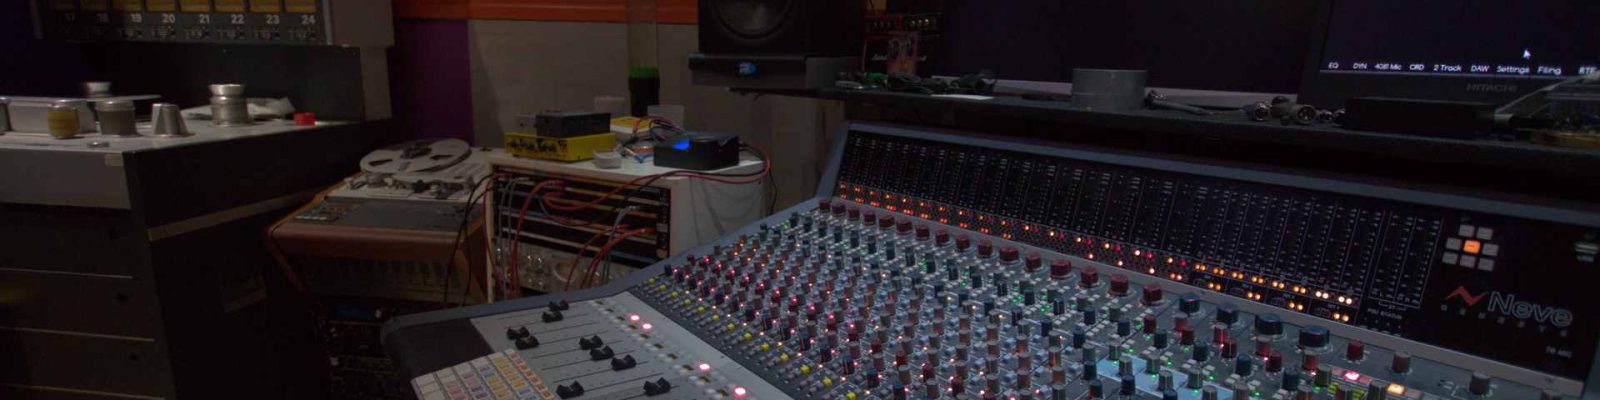 analog recording studios